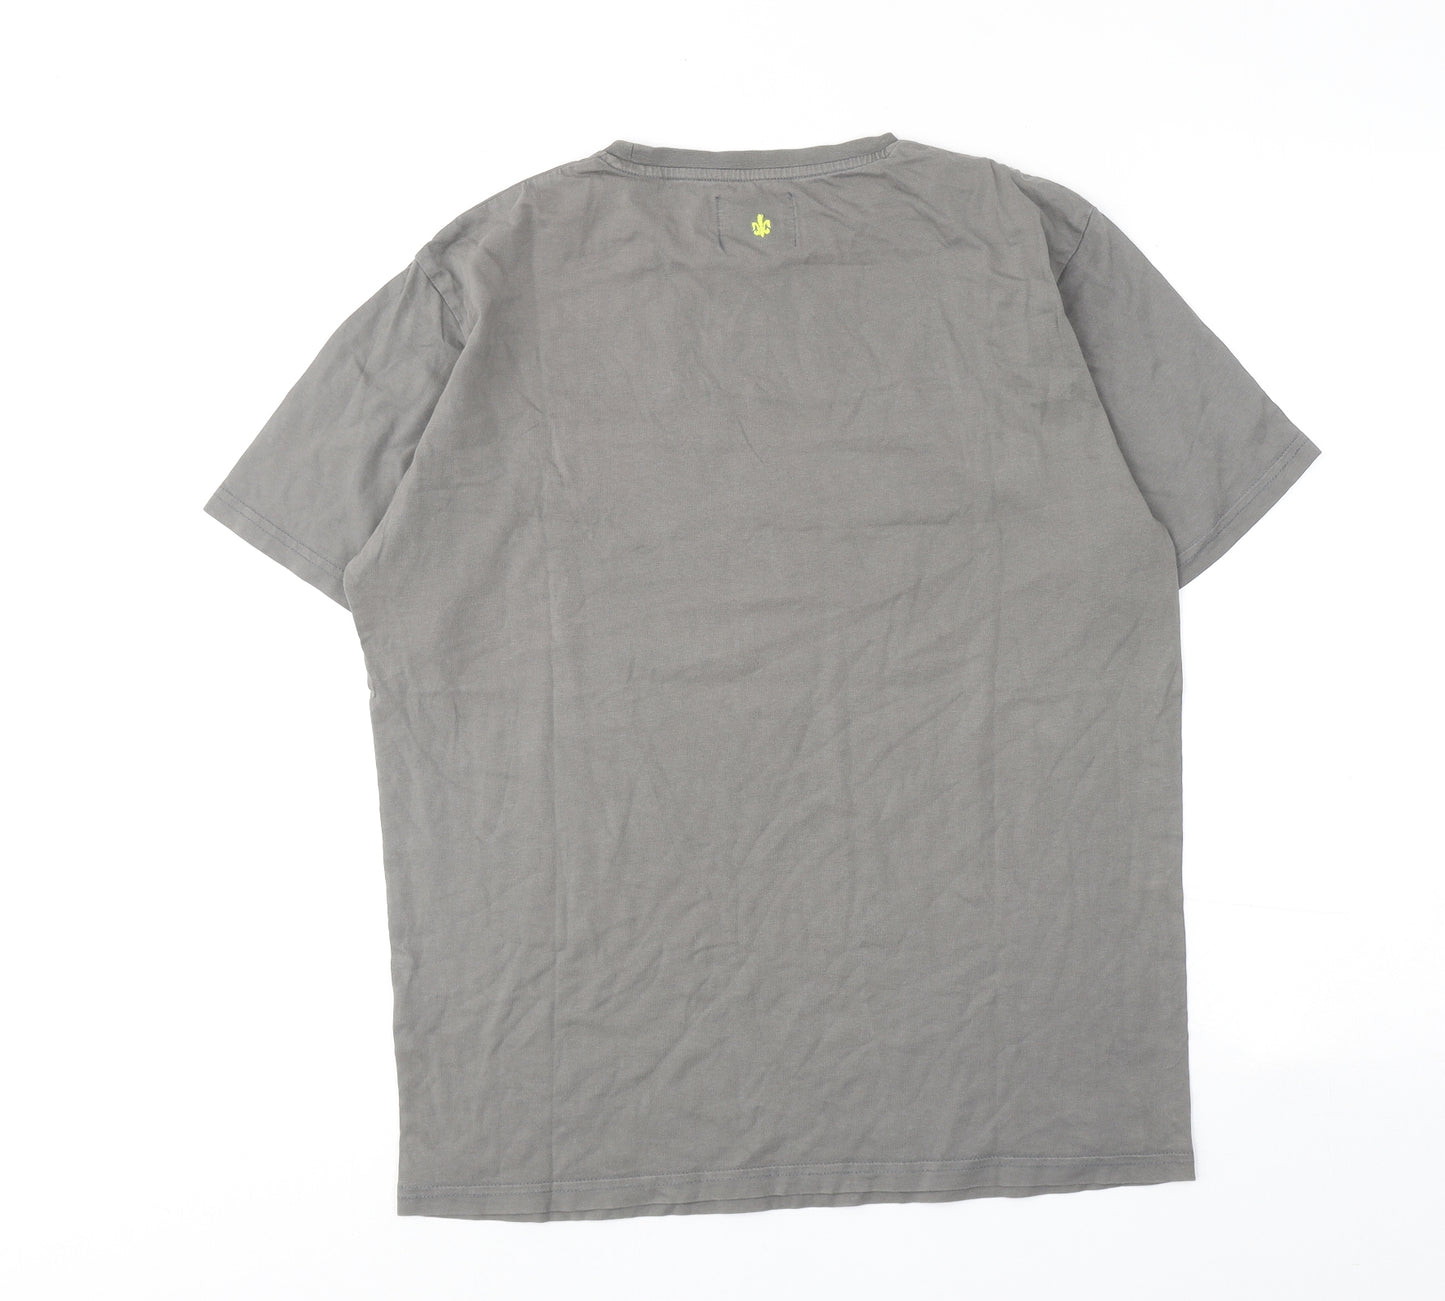 Henleys Mens Grey Cotton T-Shirt Size L Round Neck